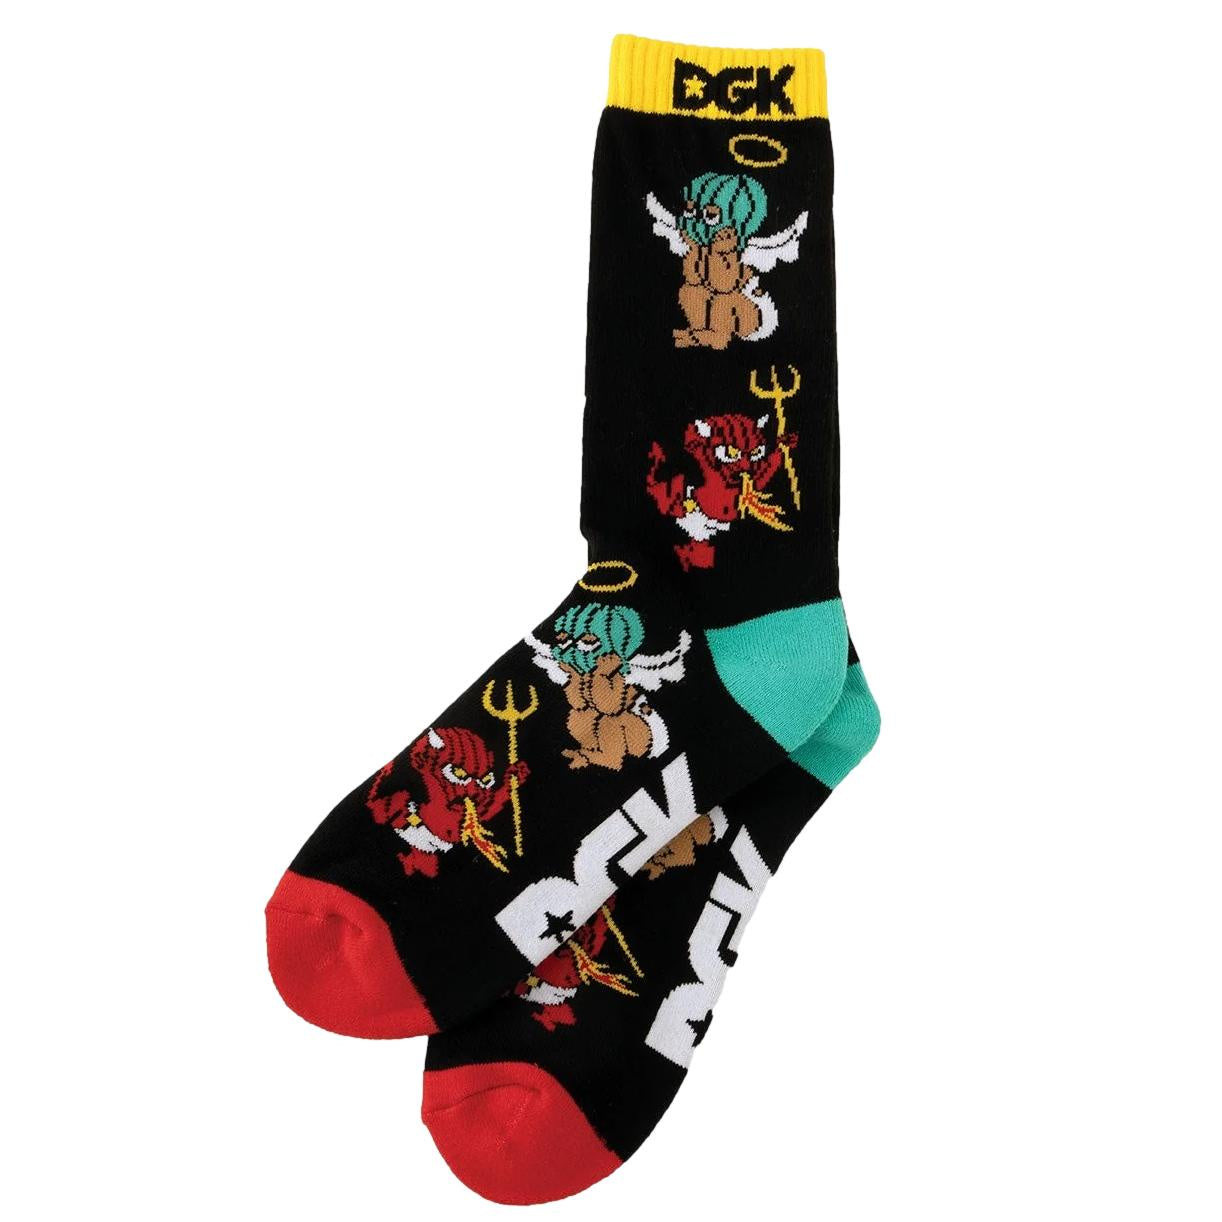 DGK Crazy Life Socks Black